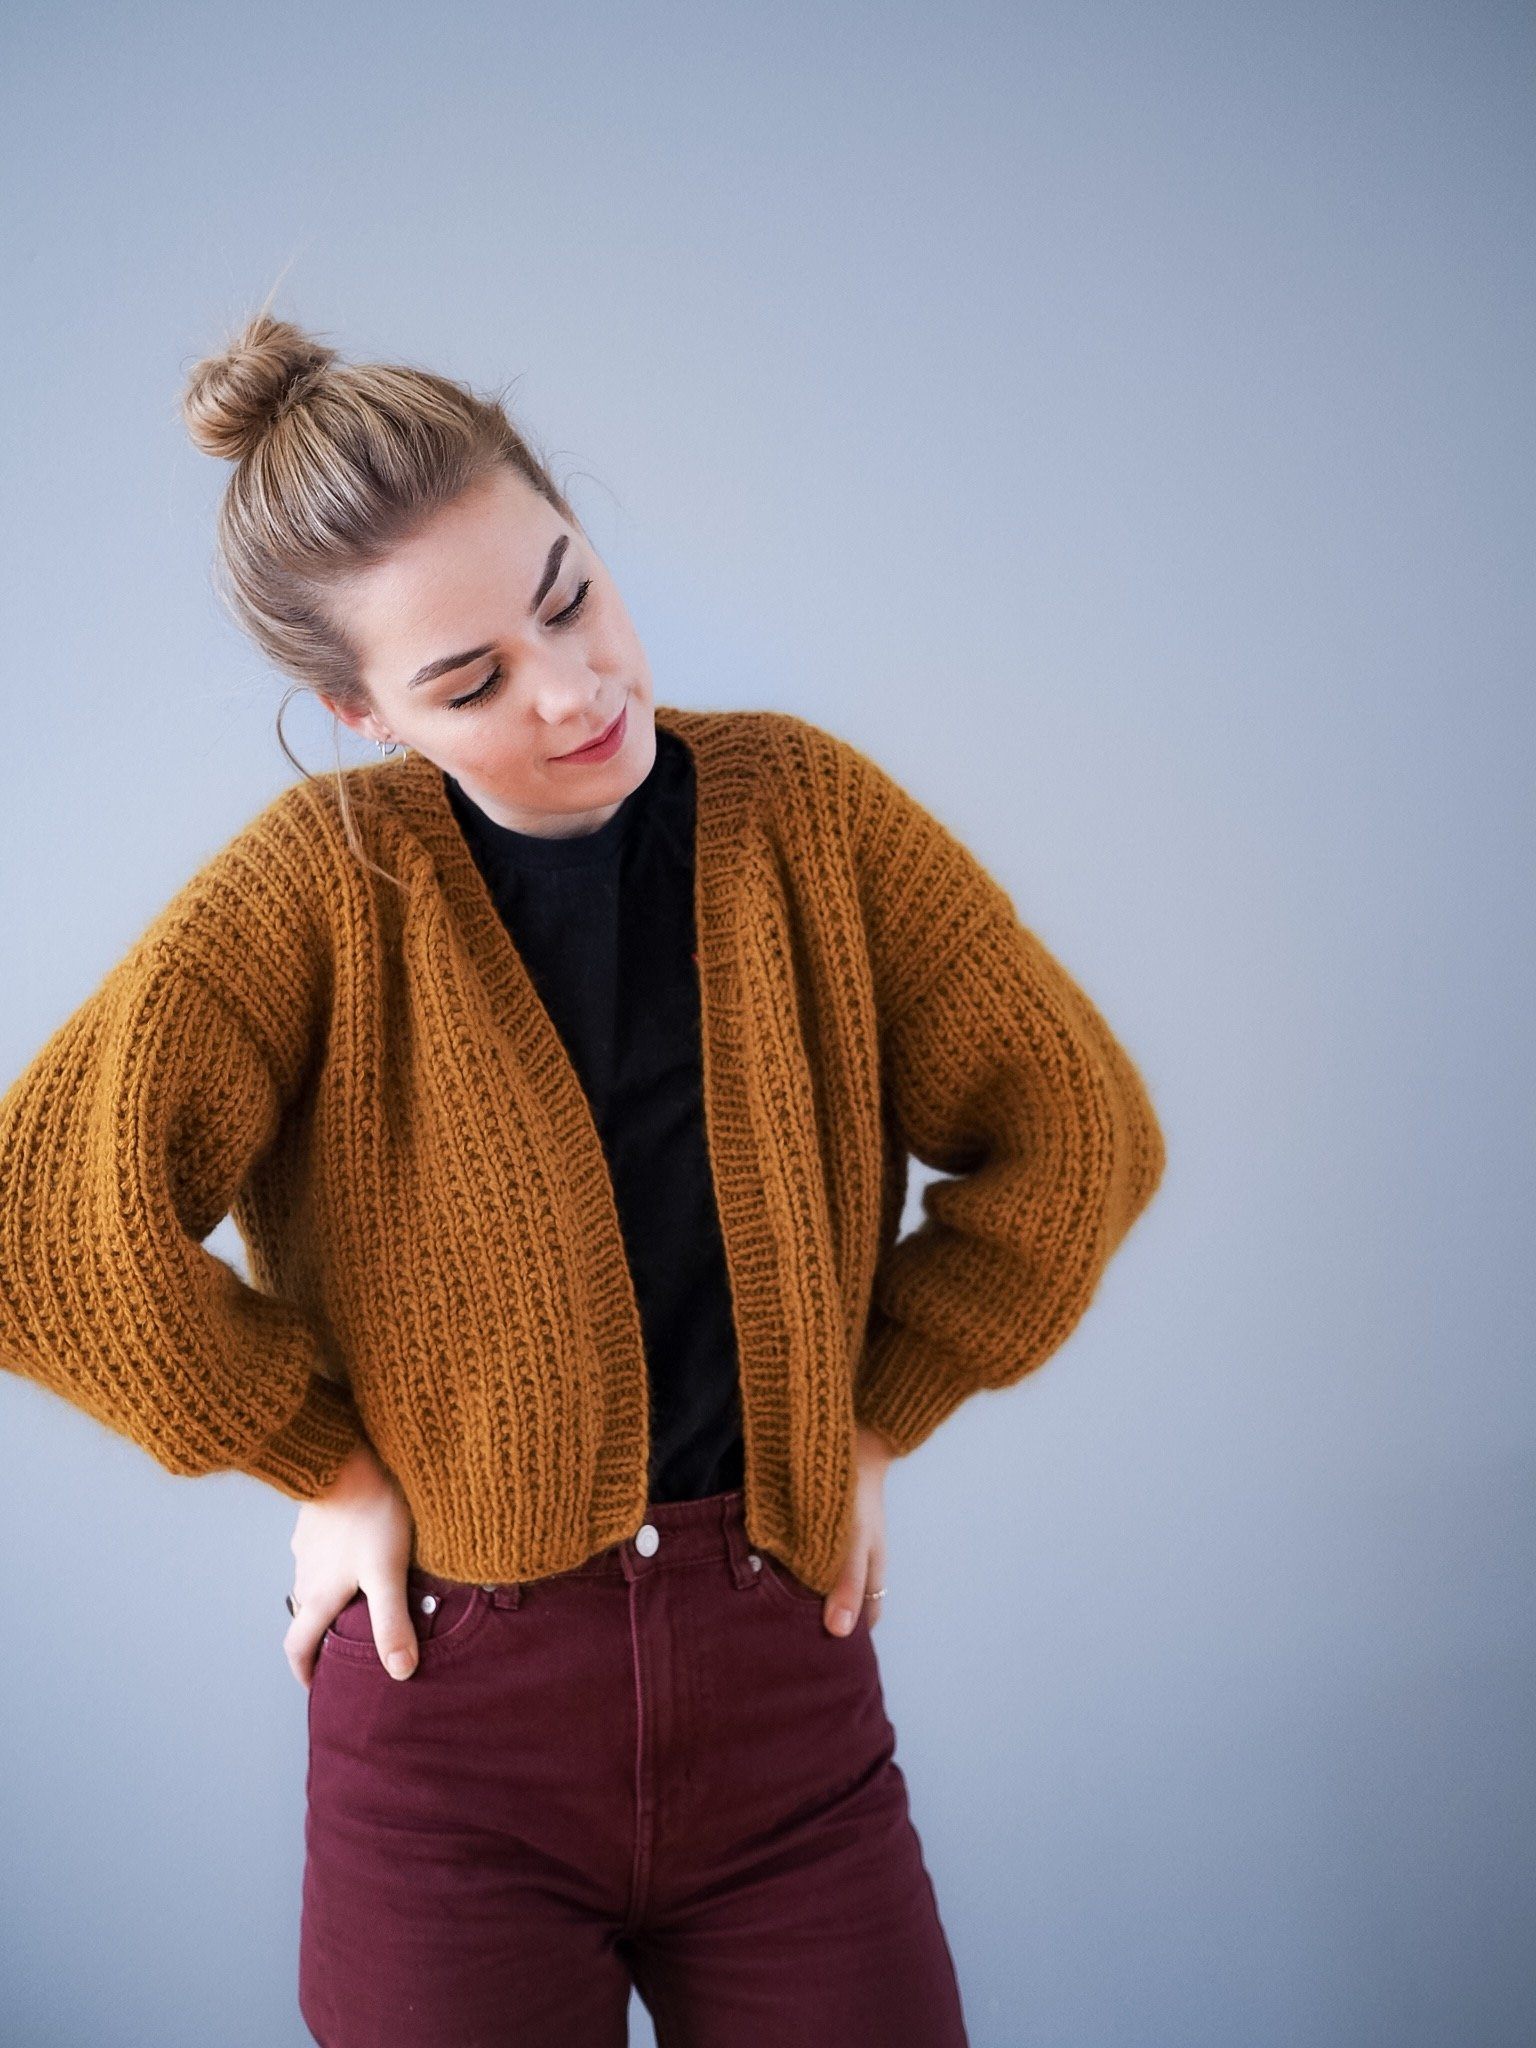 Chunkyvinterjacket sweater GS english patterns 